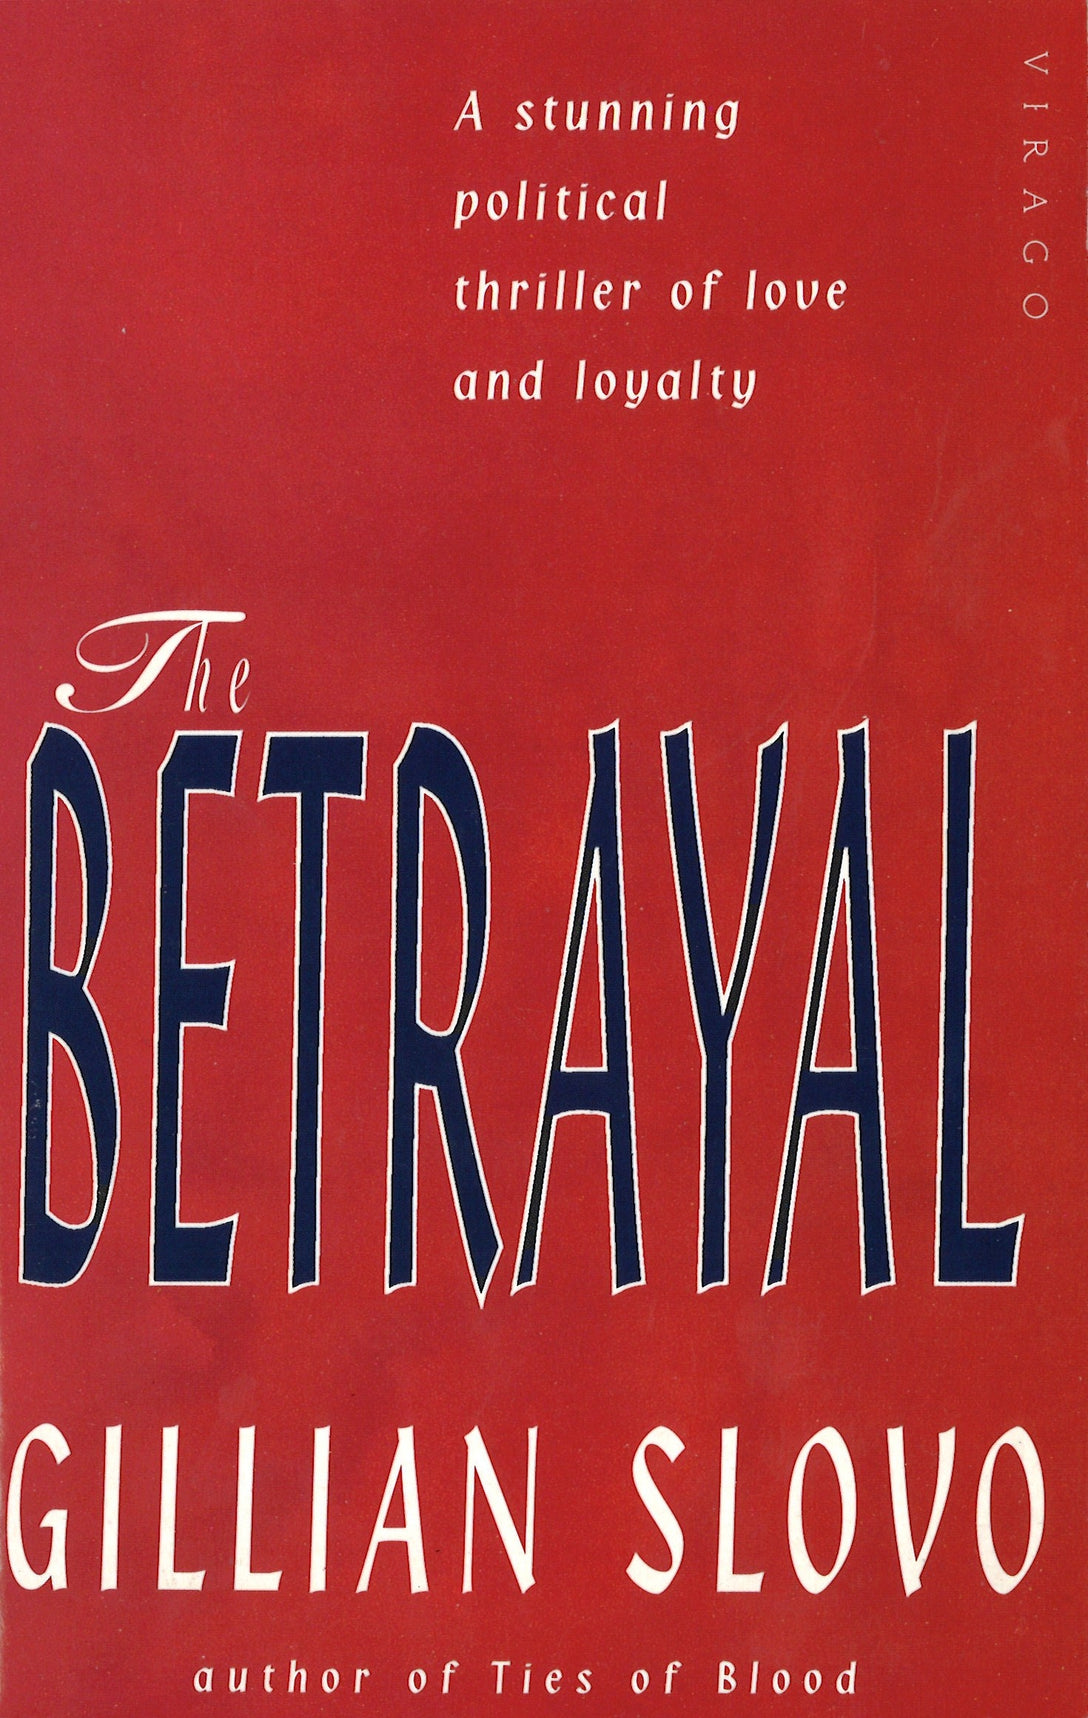 The Betrayal by Gillian Slovo